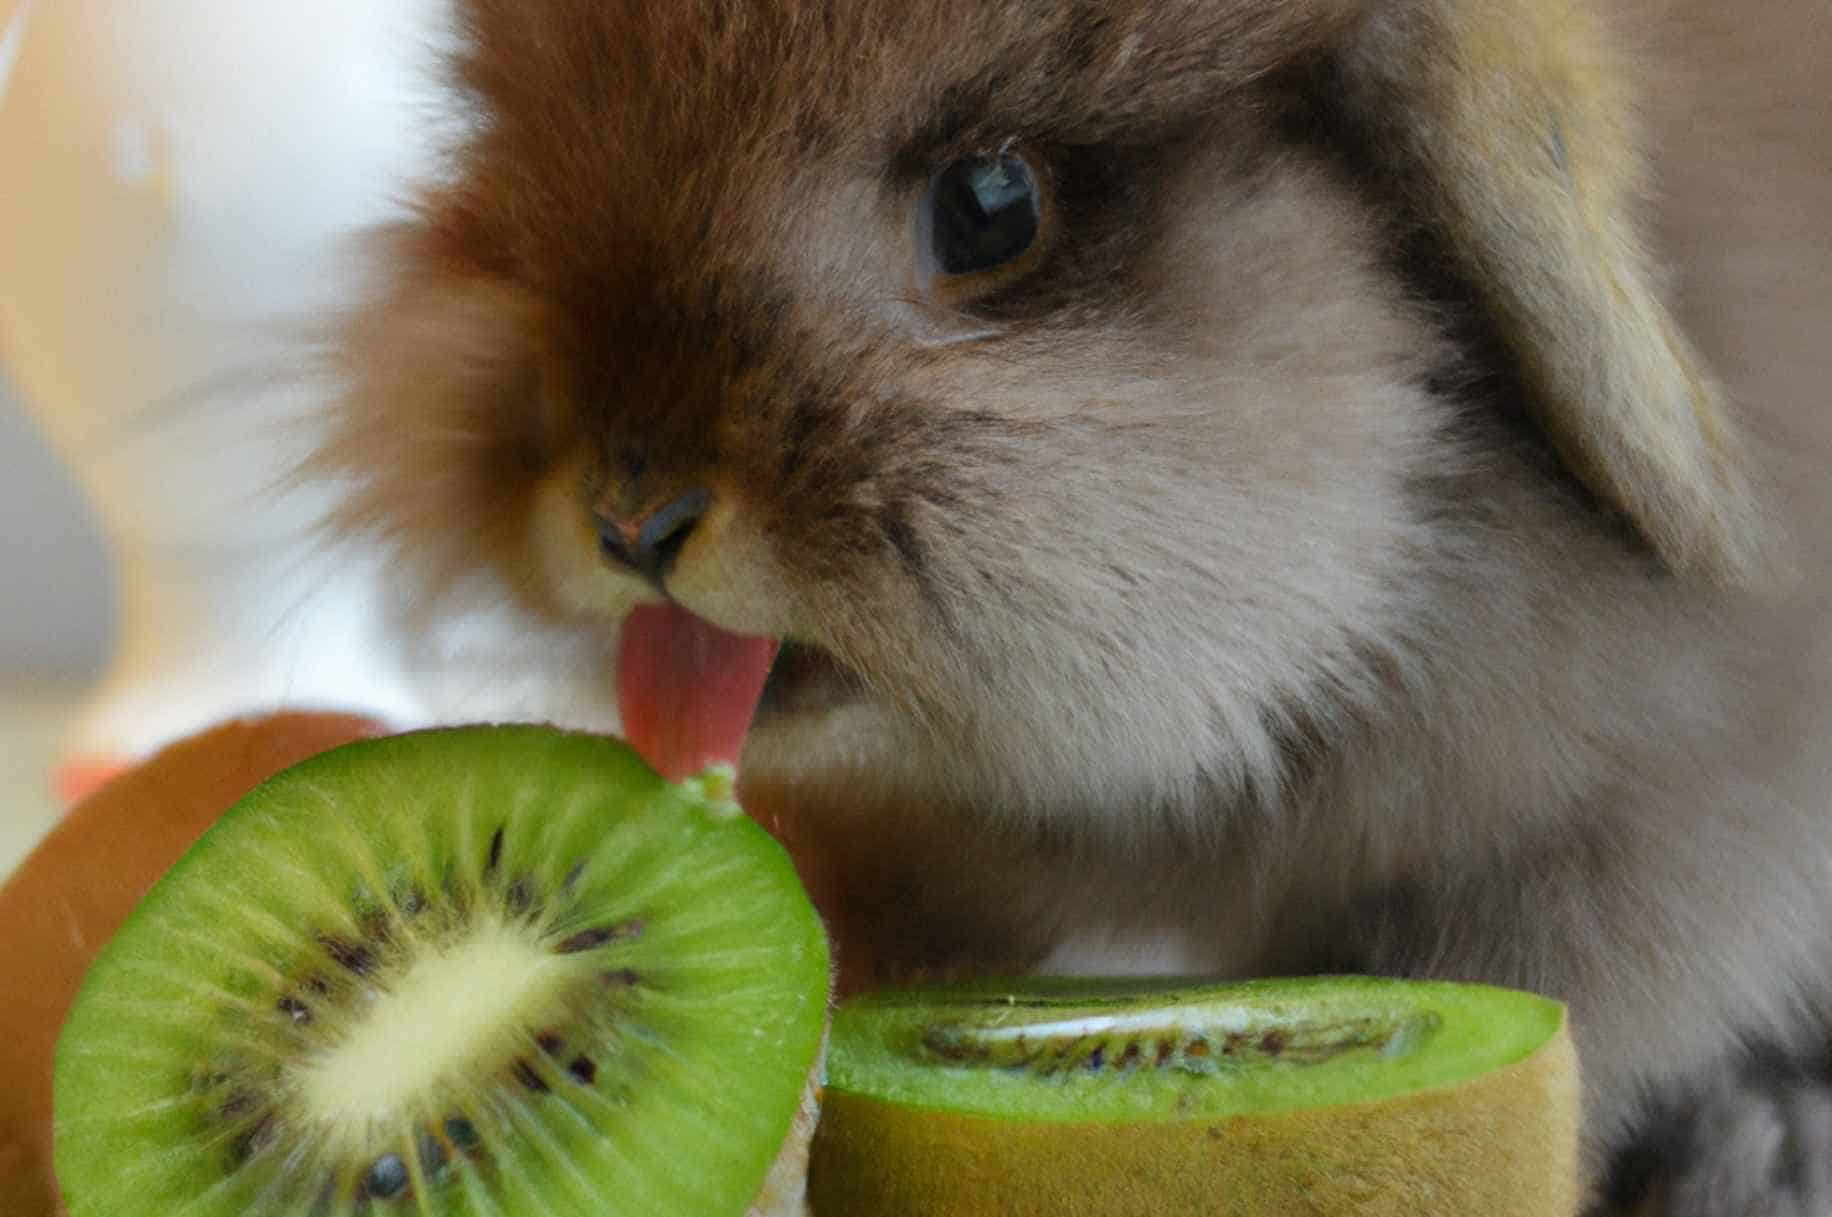 Can Rabbits Eat Kiwi